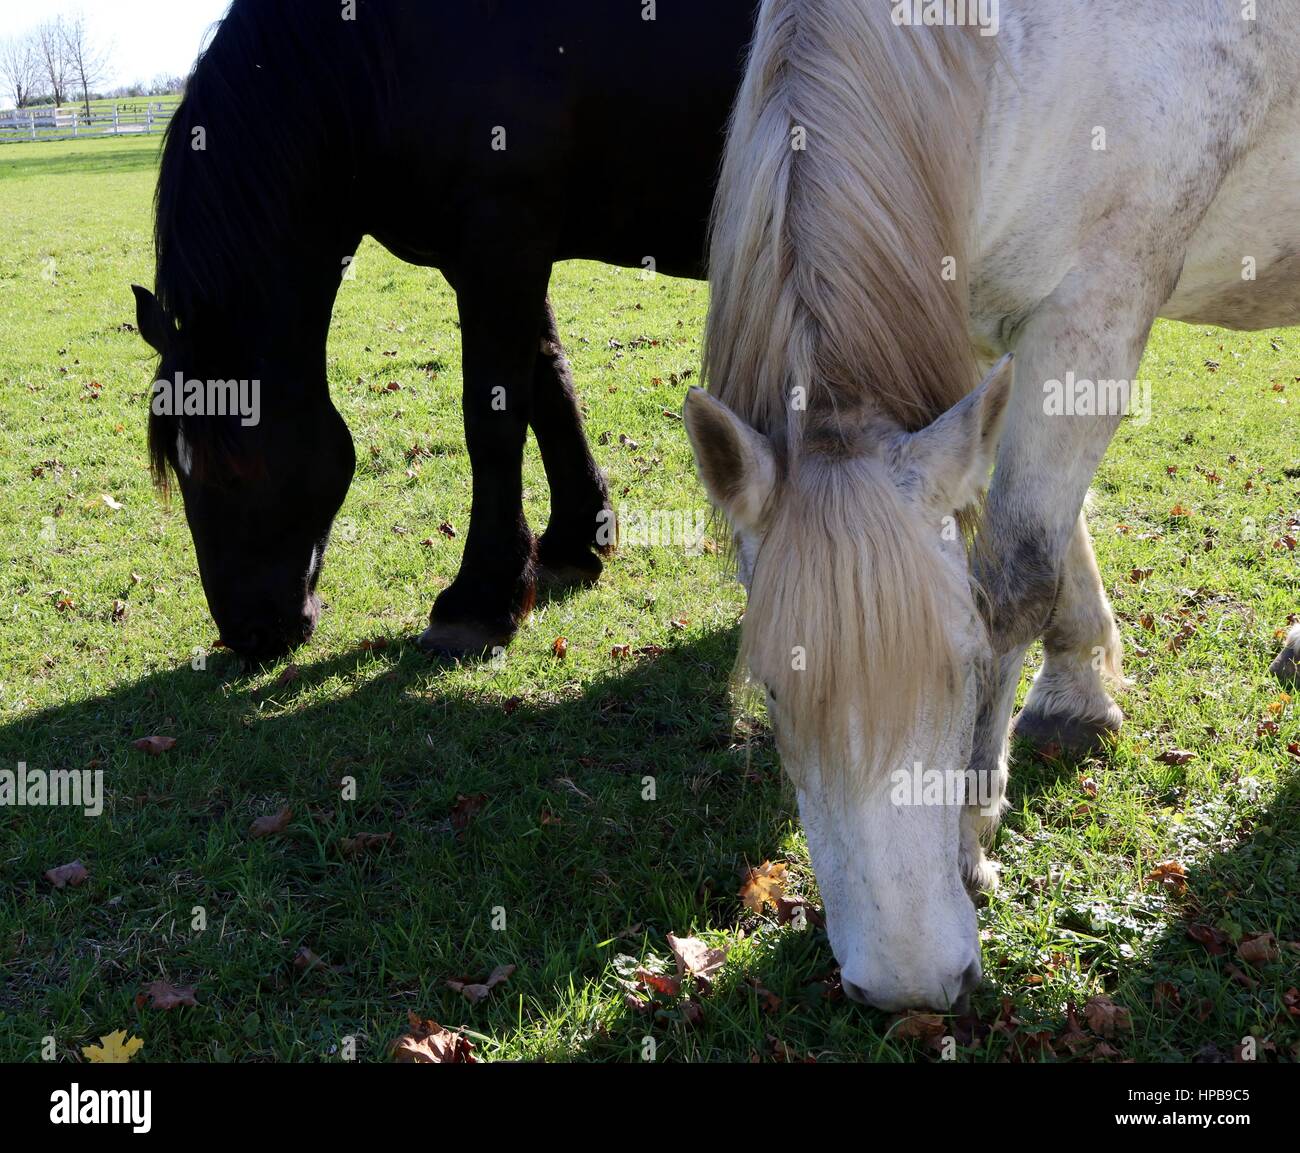 Two horses grazing. Stock Photo